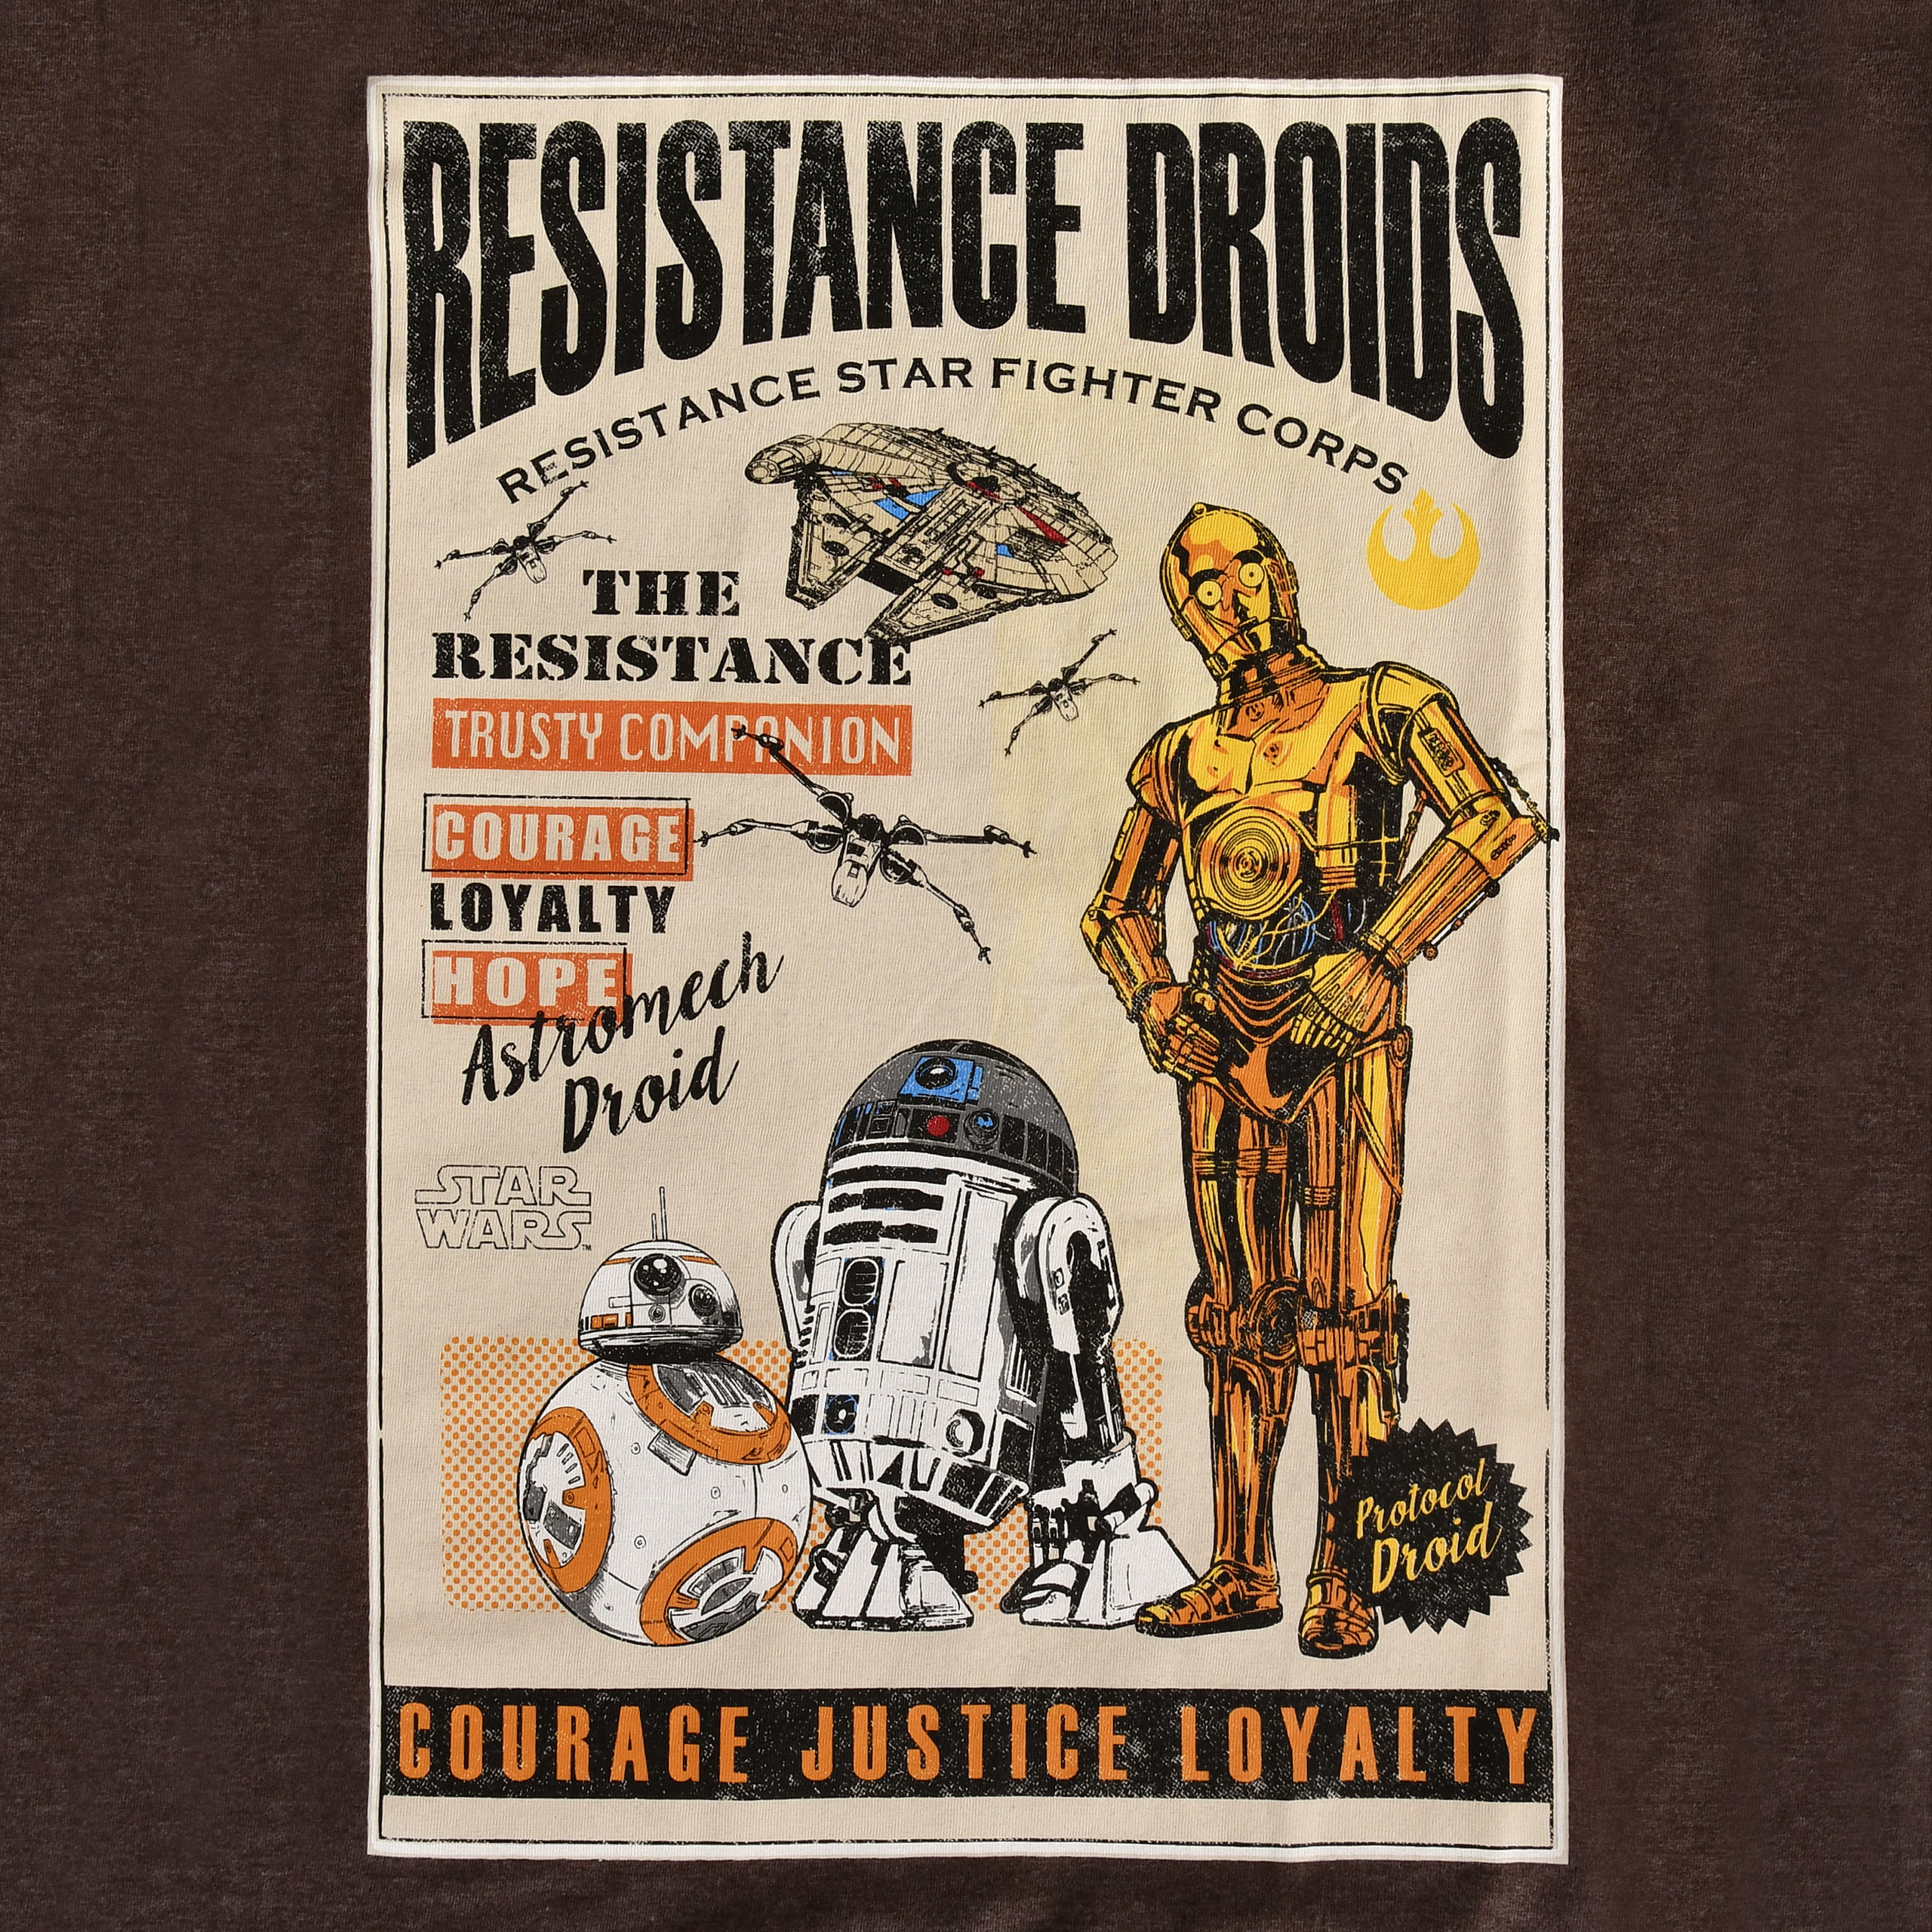 Star Wars - Resistance Droids T-Shirt braun